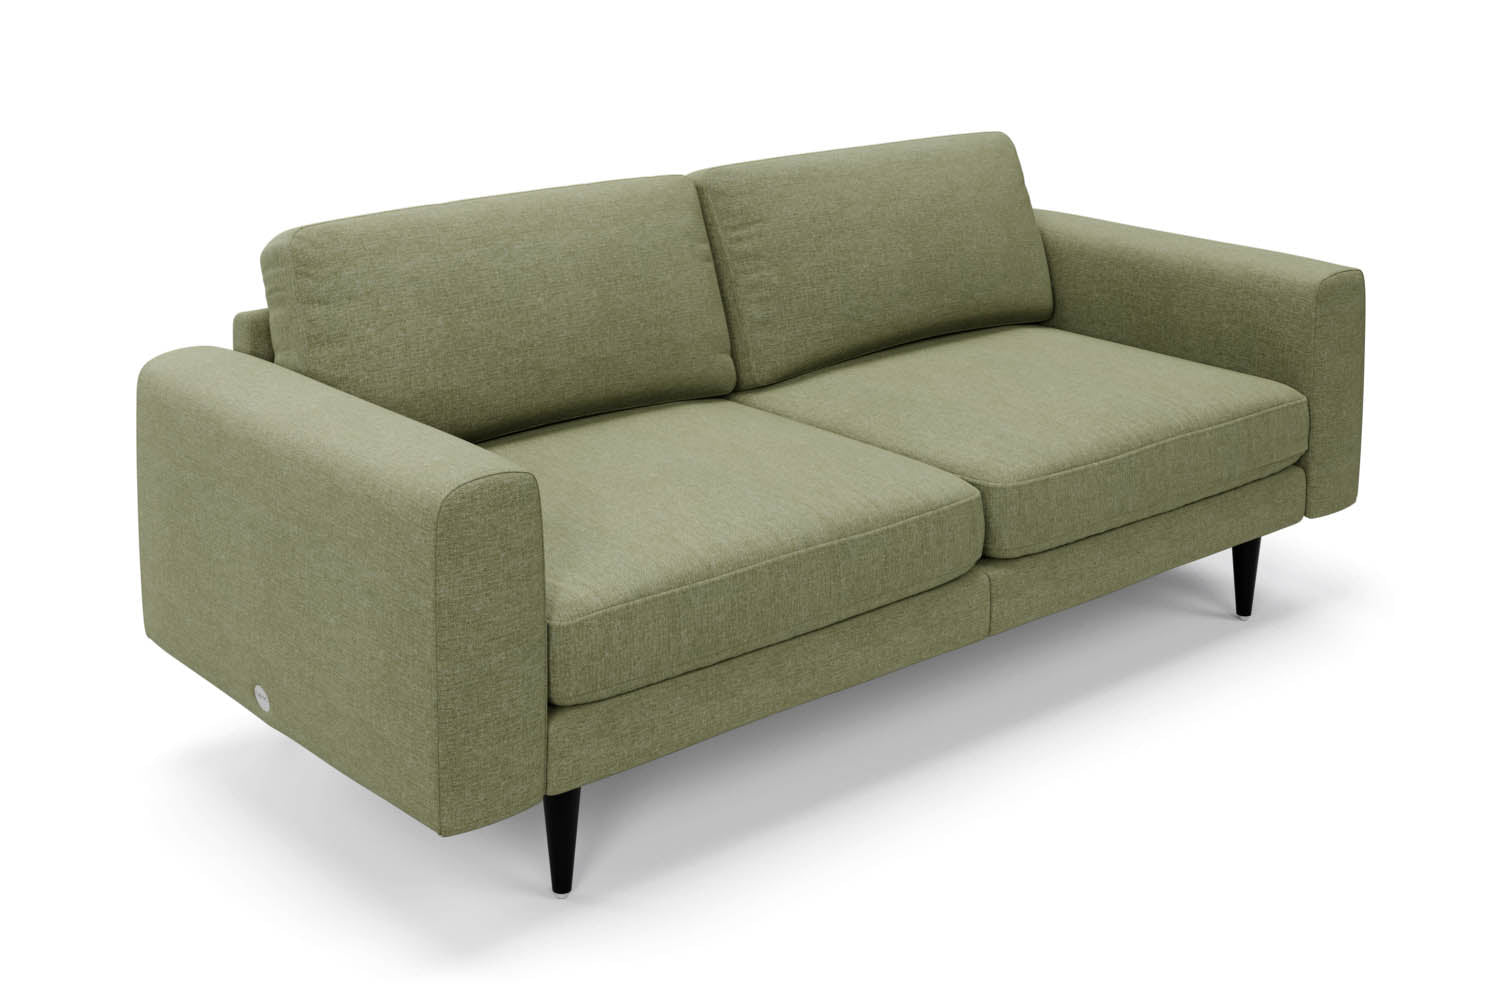 The Big Chill - 3 Seater Sofa - Sage